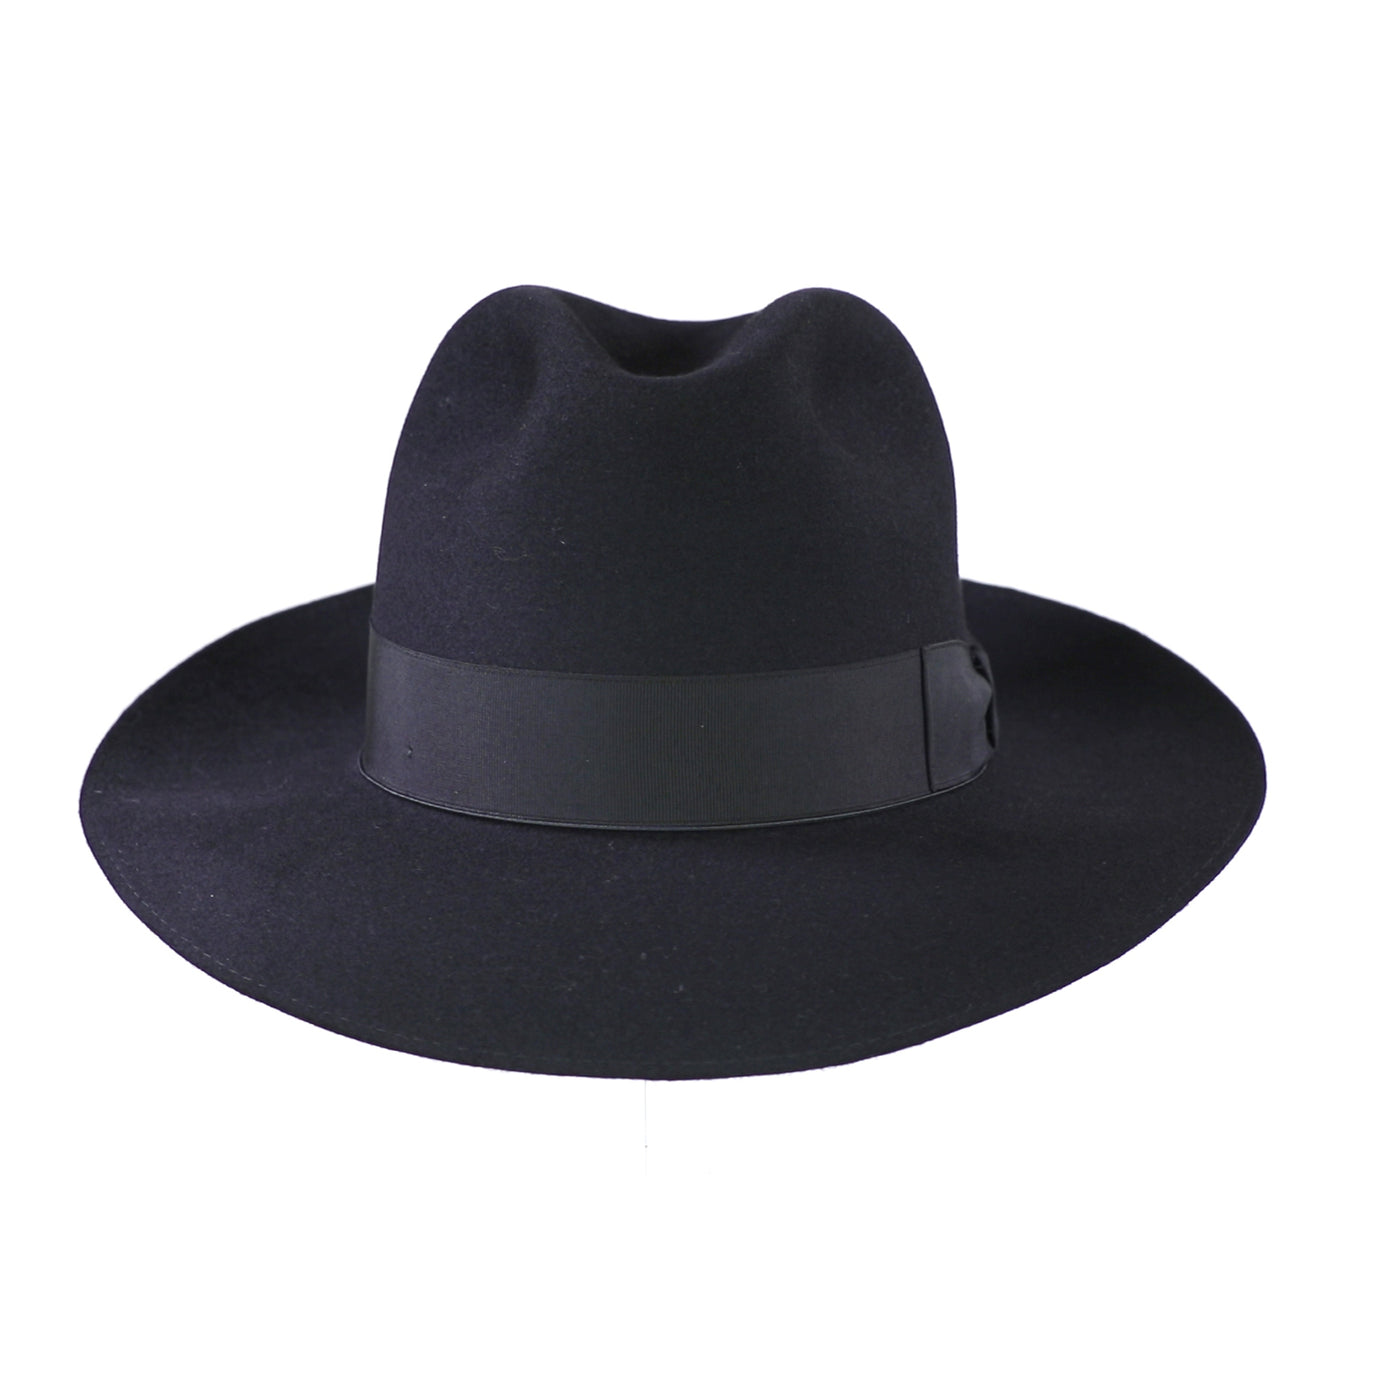 Trento 300, product_type] - Borsalino for Atica fedora hat